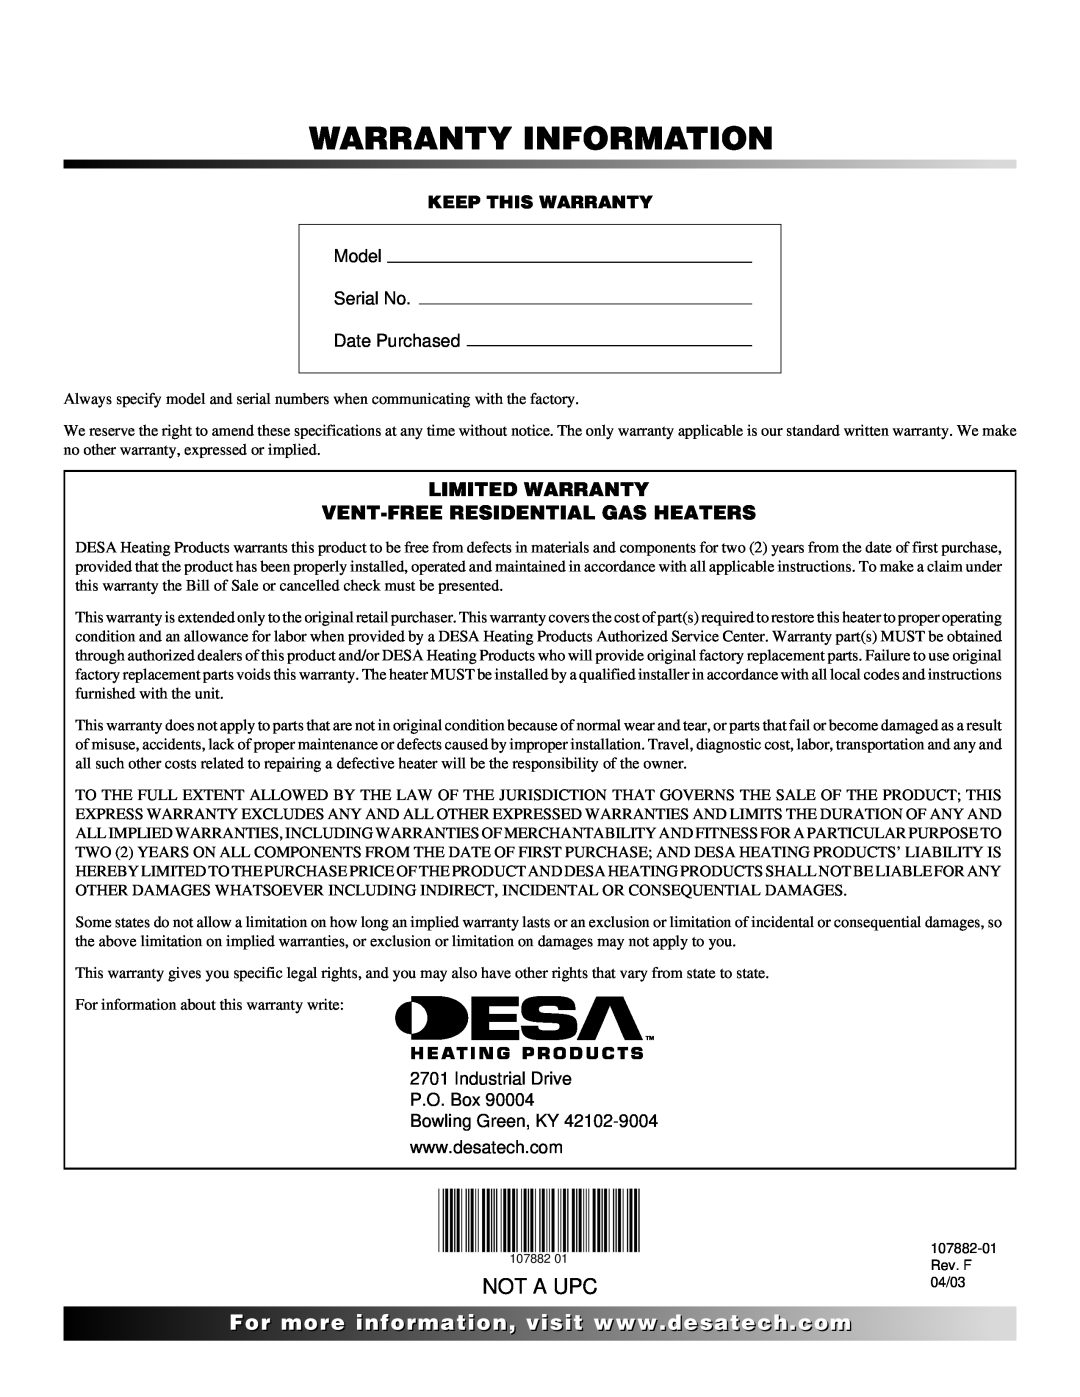 Desa CBN20 installation manual Not A Upc, Warranty Information, Limited Warranty Vent-Freeresidential Gas Heaters 